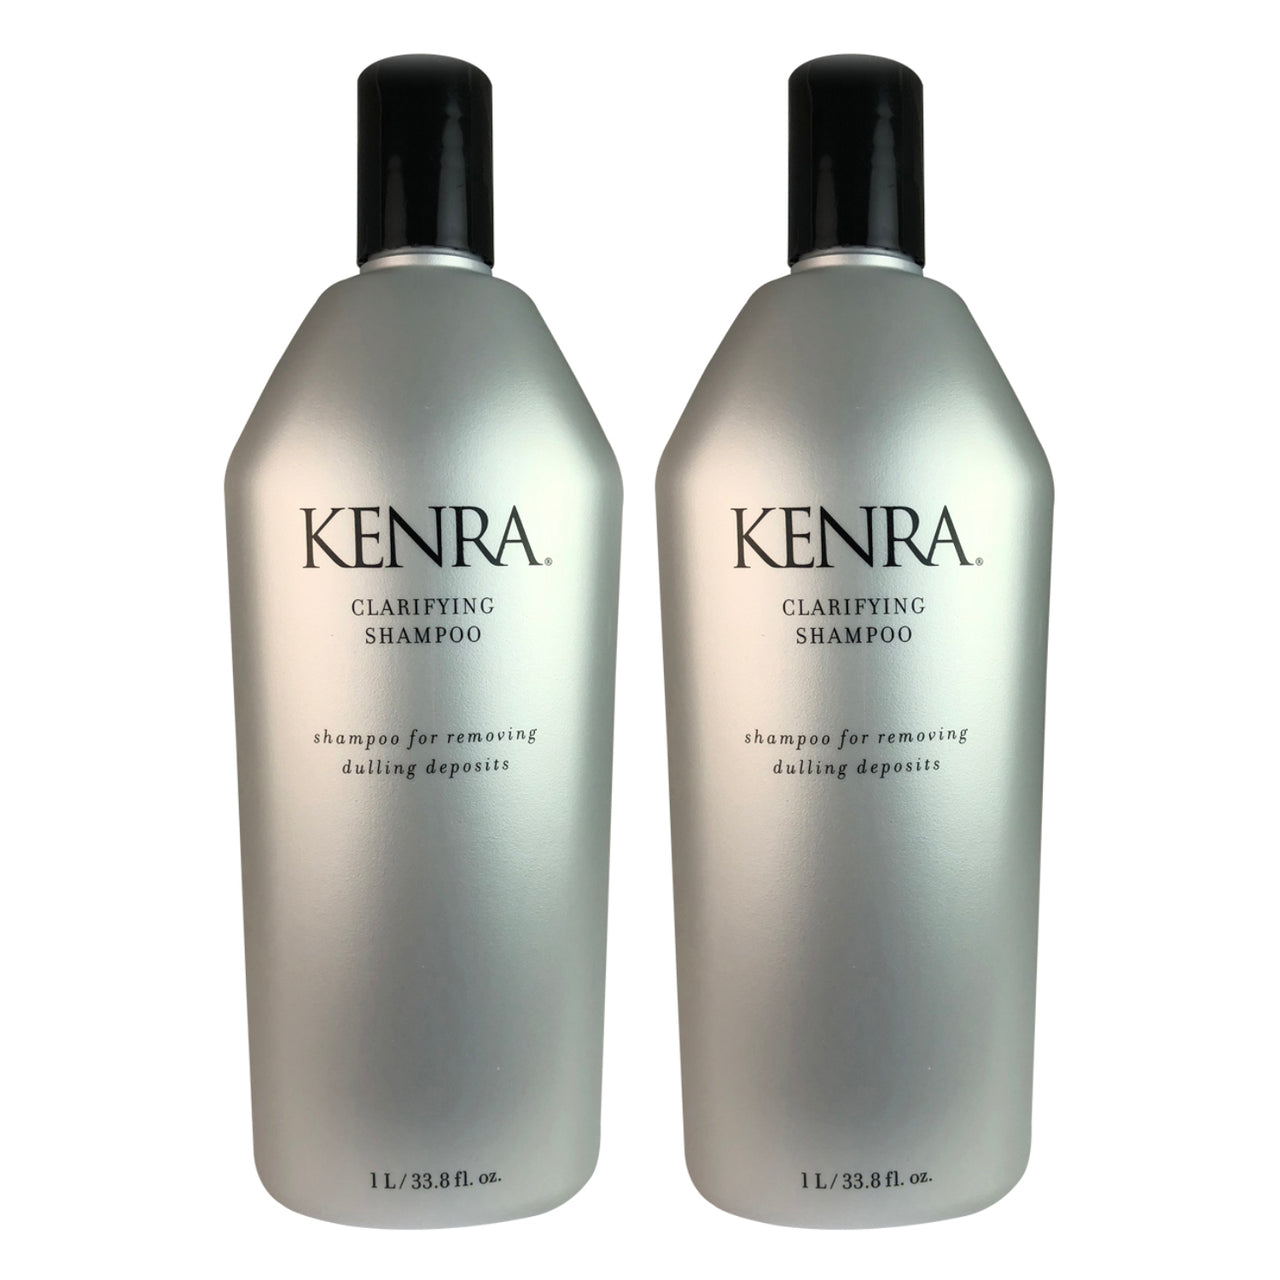 Kenra Clarifying Hair Shampoo Liter for Deep Cleansing 33.8 oz 2 Pack